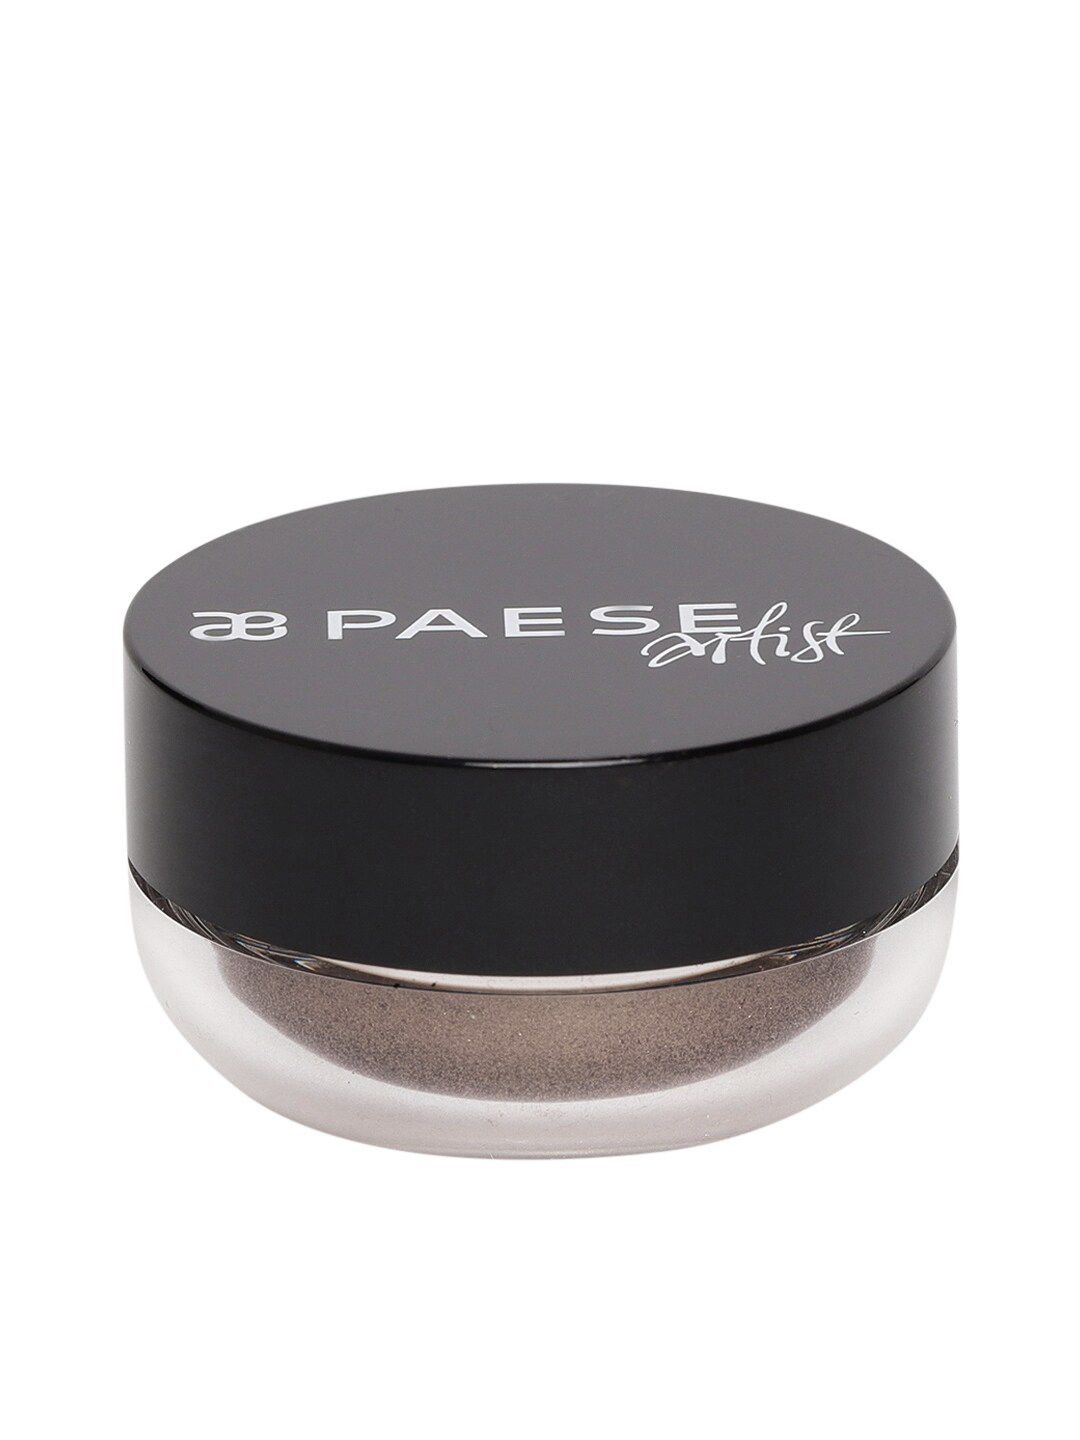 Paese Cosmetics Pure Pigments Eyeshadow - Terra Rosa 04 Price in India